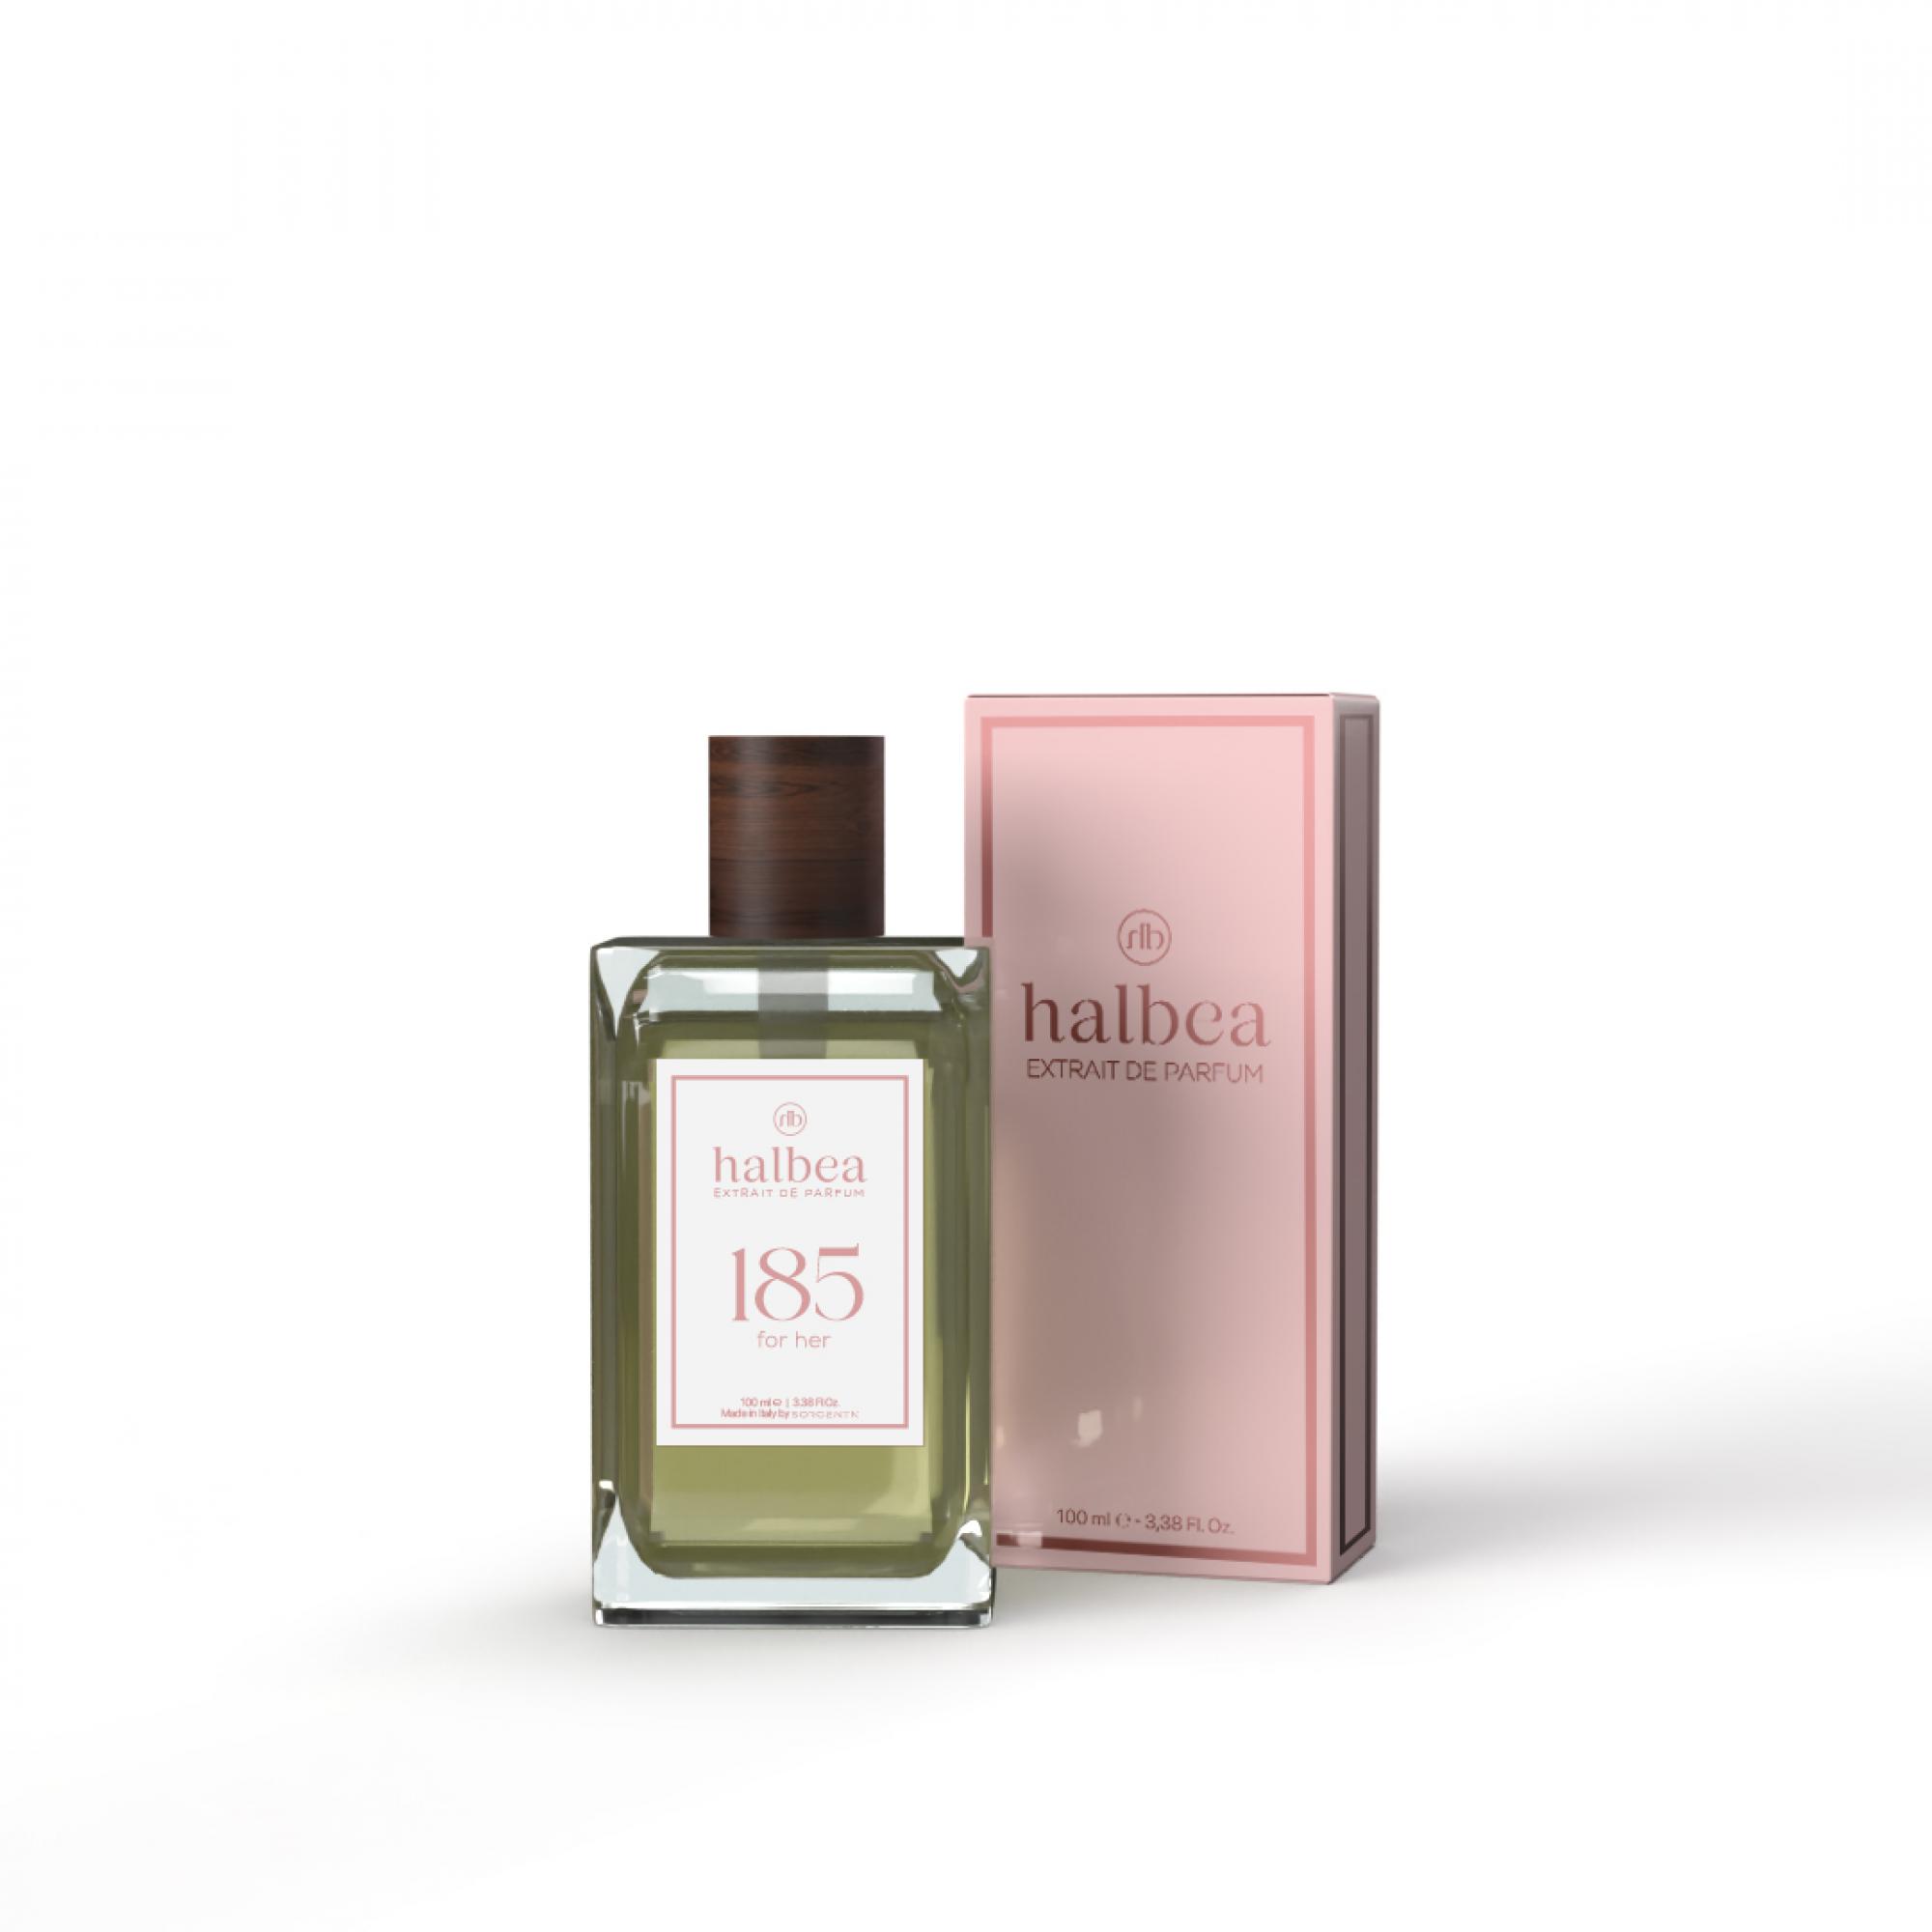 Halbea Parfum Nr. 185 insp. by Clinique Aromatics Elixir Sorgenta 100ml